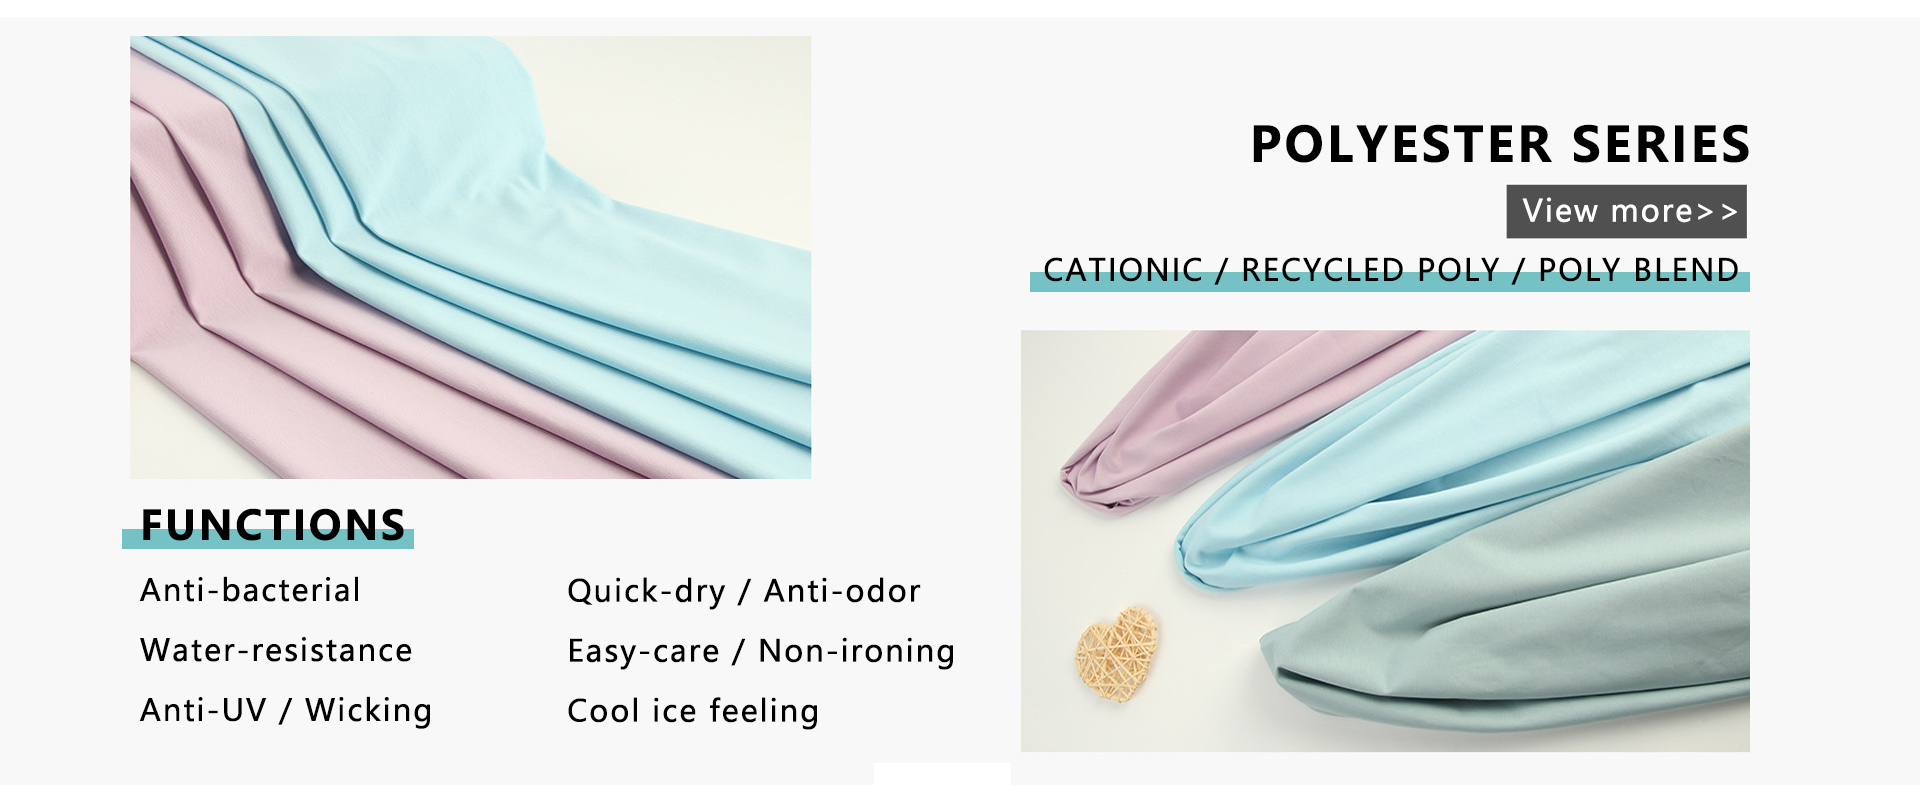 पॉलिएस्टर श्रृंखला बुना हुआ कपड़ा, एंटी-यूवी, एंटी-बैक्टीरियल, पानी प्रतिरोधी।